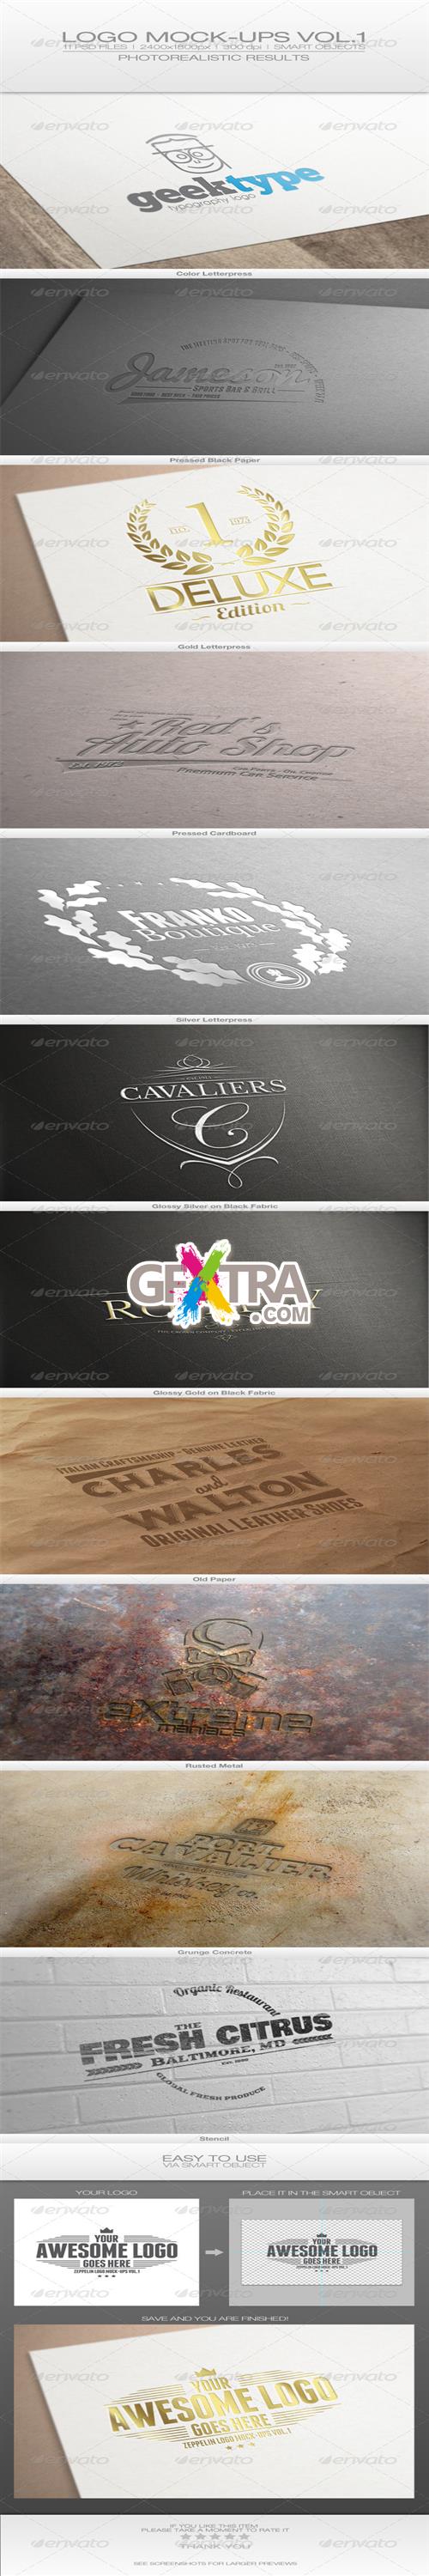 GraphicRiver - Logo Mock-ups Vol.1